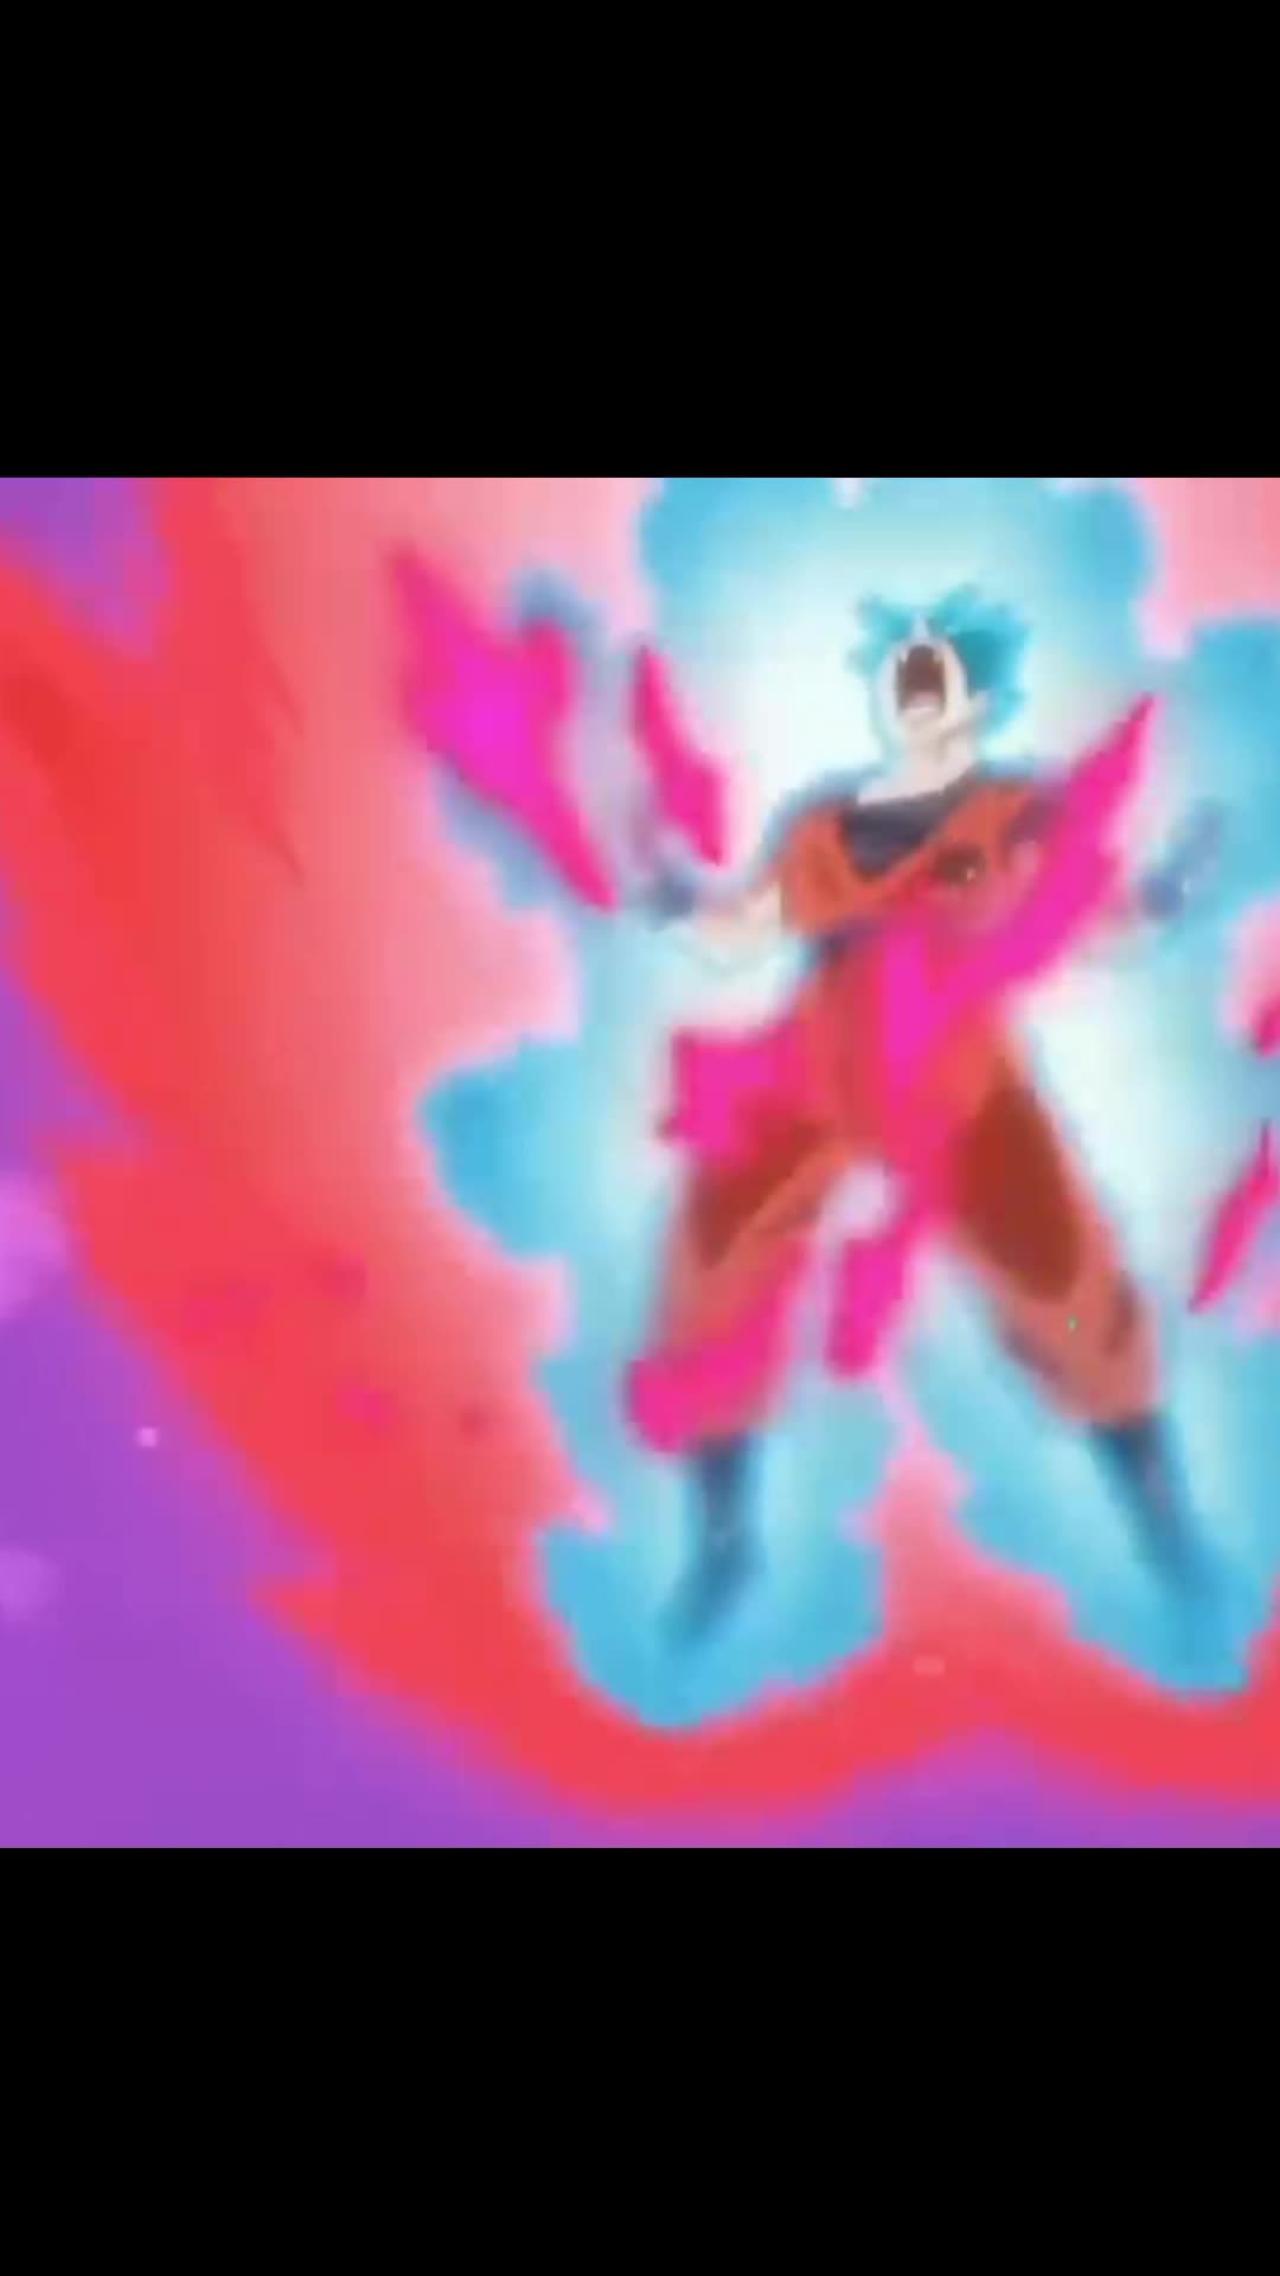 Gohan Power Level vs Goku